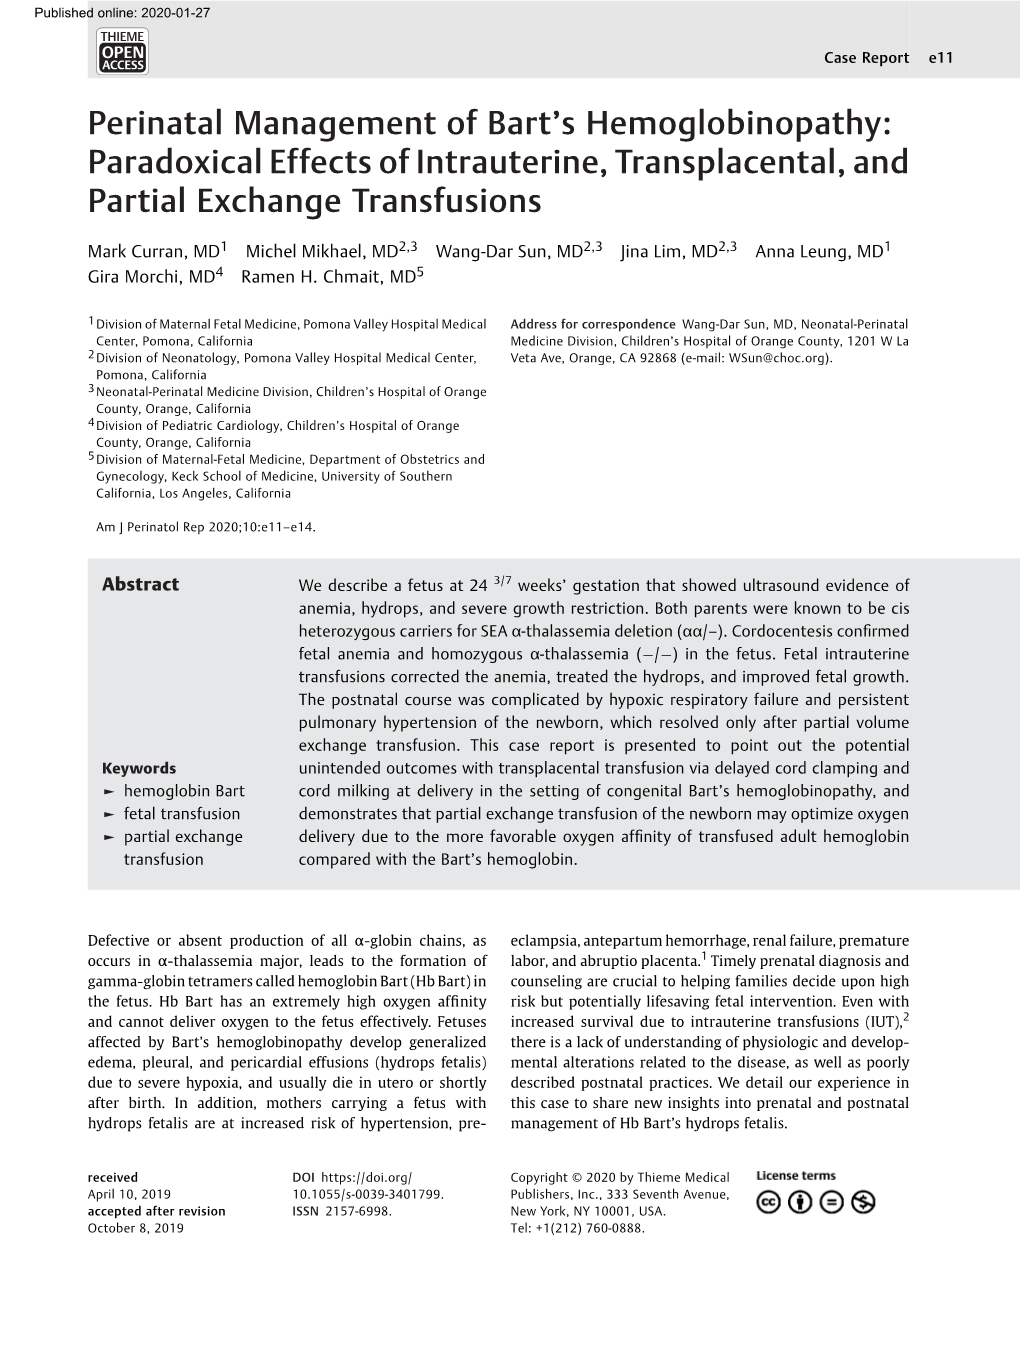 Perinatal Management of Bart's Hemoglobinopathy